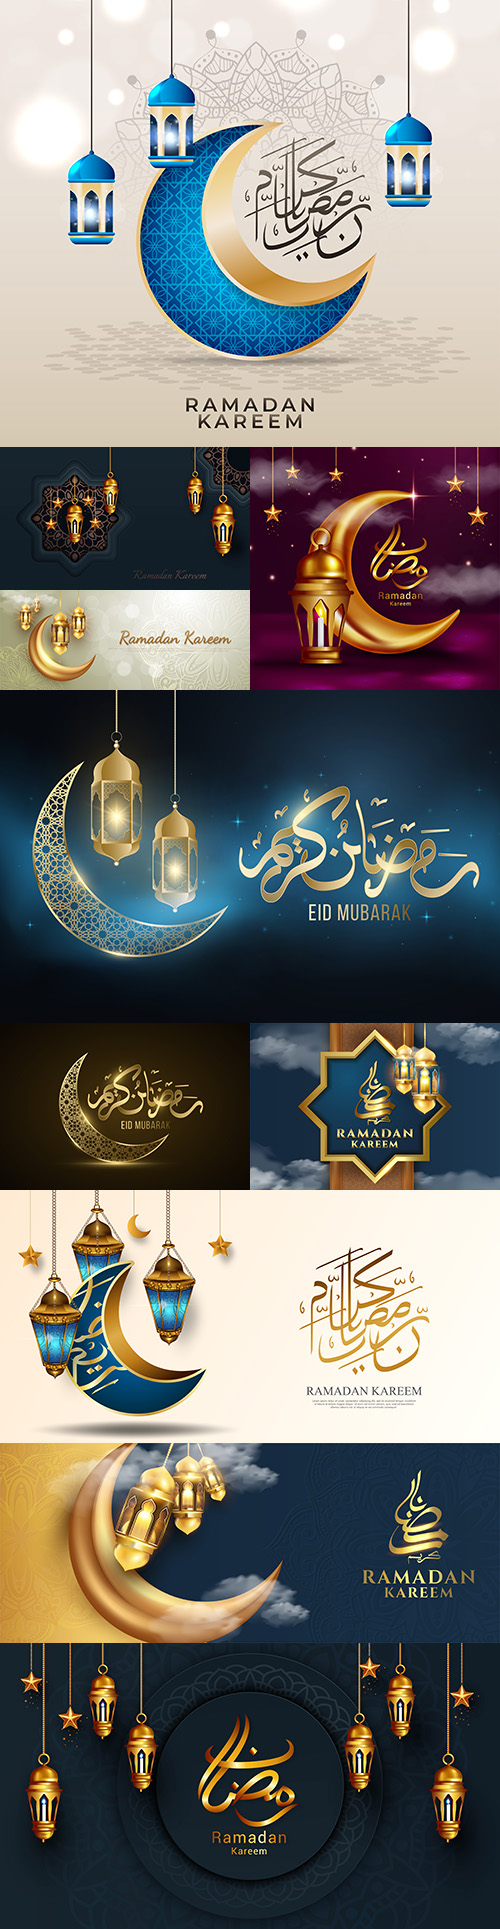 Islamic greeting Ramadan Kareem design with beautiful lanterns and crescent